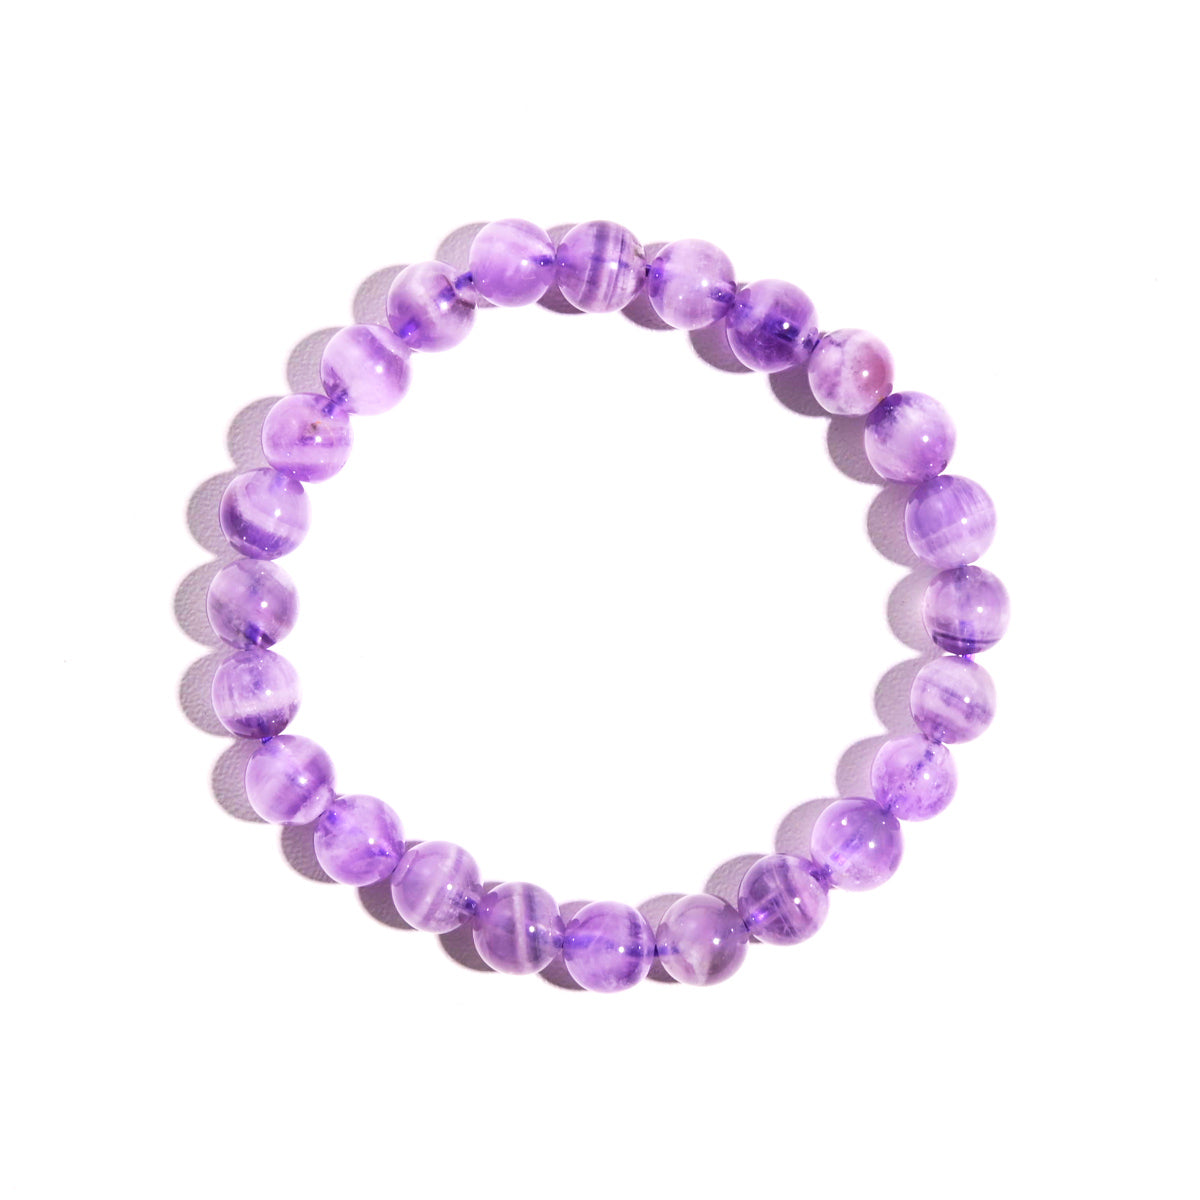 Buy Grade A Amethyst Crystal Bead Bracelet 8mm, Purple Amethyst Bracelet,  Healing Crystals, Great Gift for Men & Women Online in India - Etsy